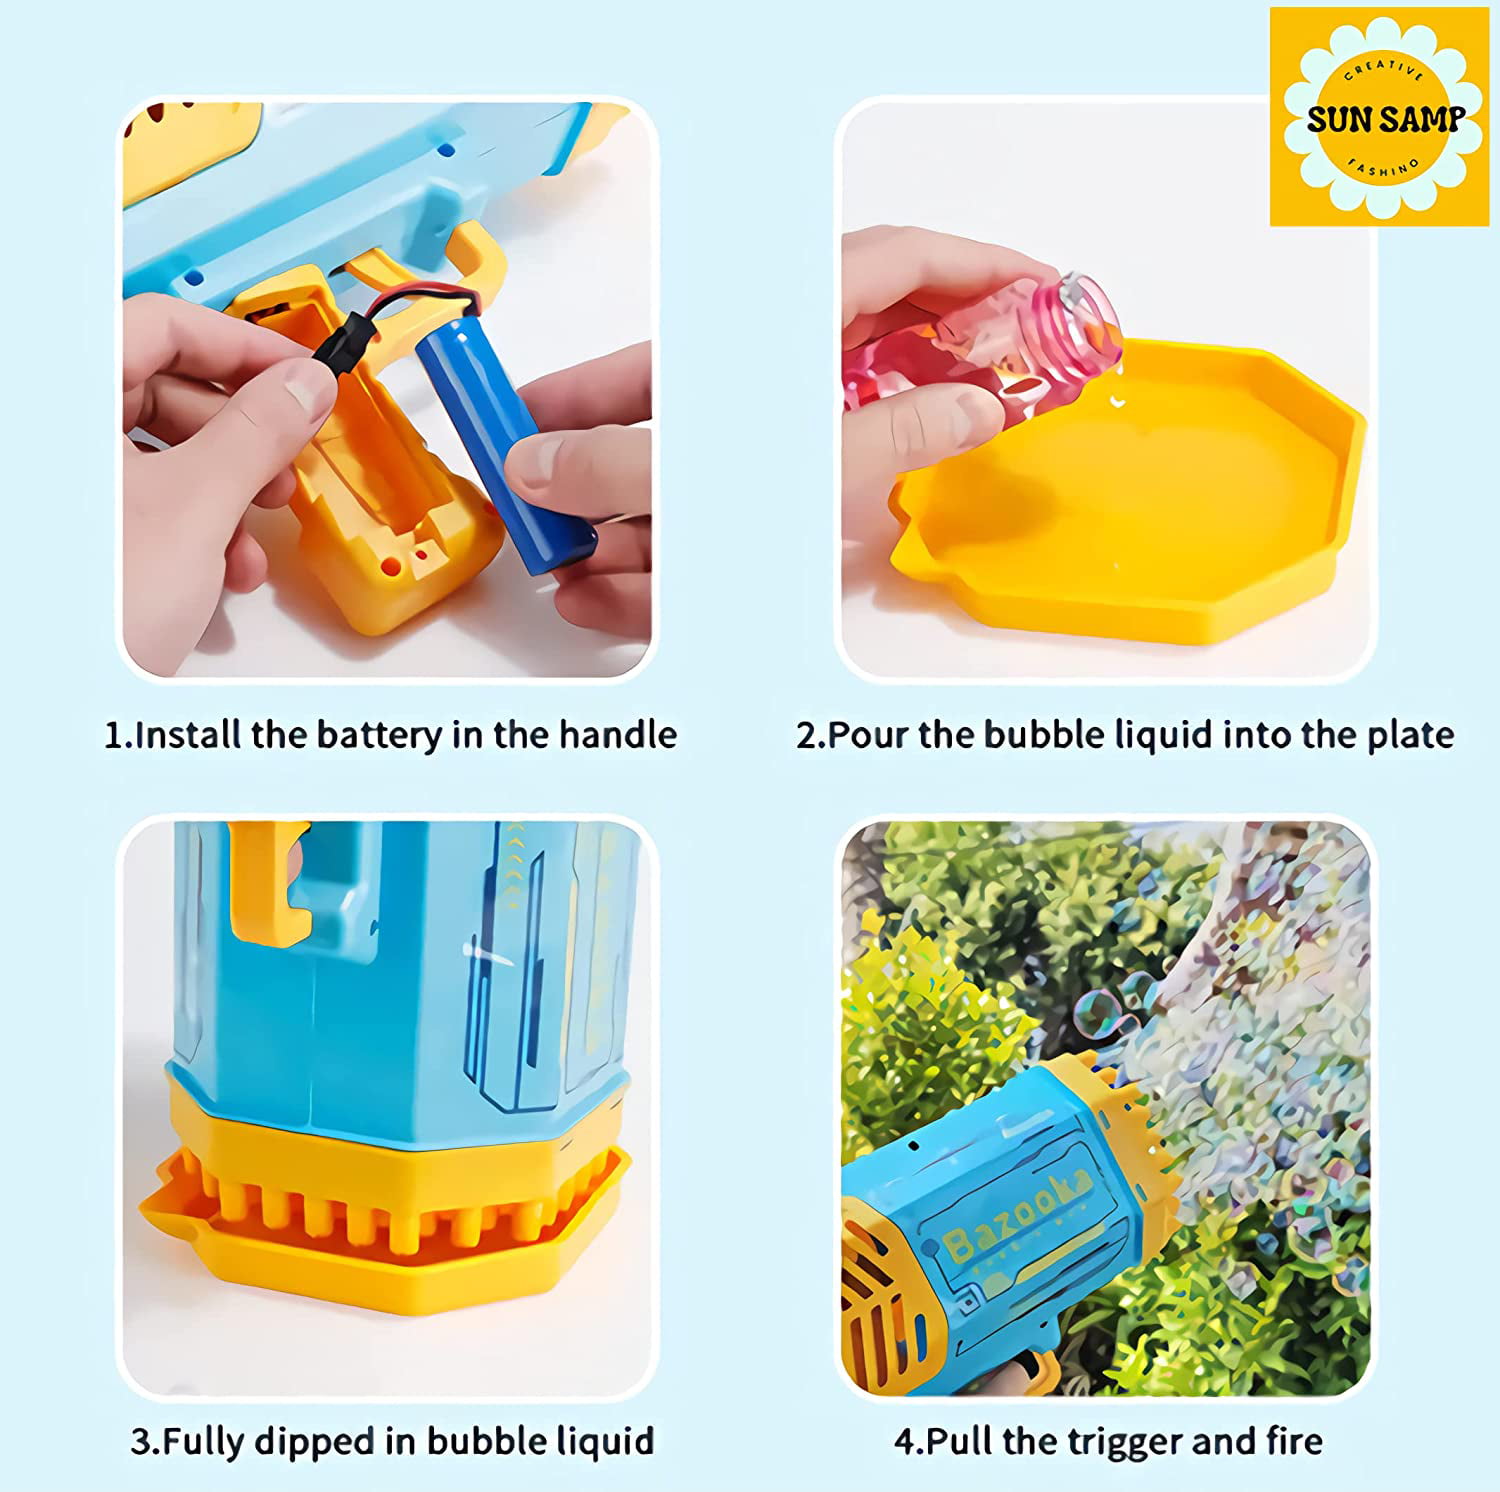  Bazooka Bubble Gun for Kids - Automatic Continuous